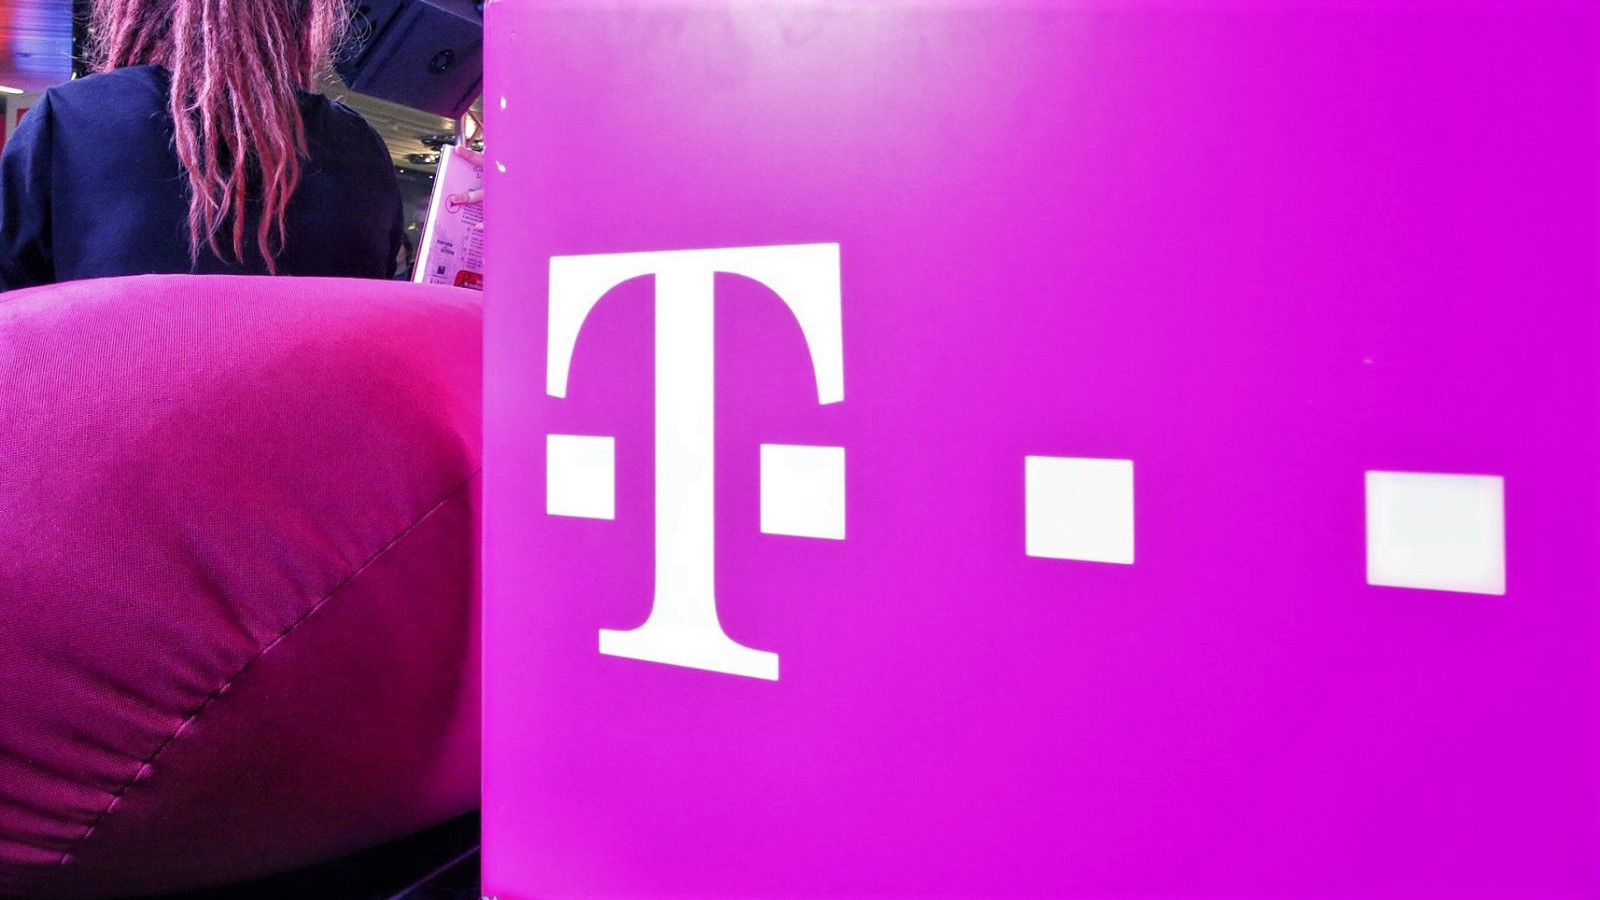 Telekom Geburtstagsgeschenk 2018
 Telekom a rezolvat cea mai mare problemă cu contractele